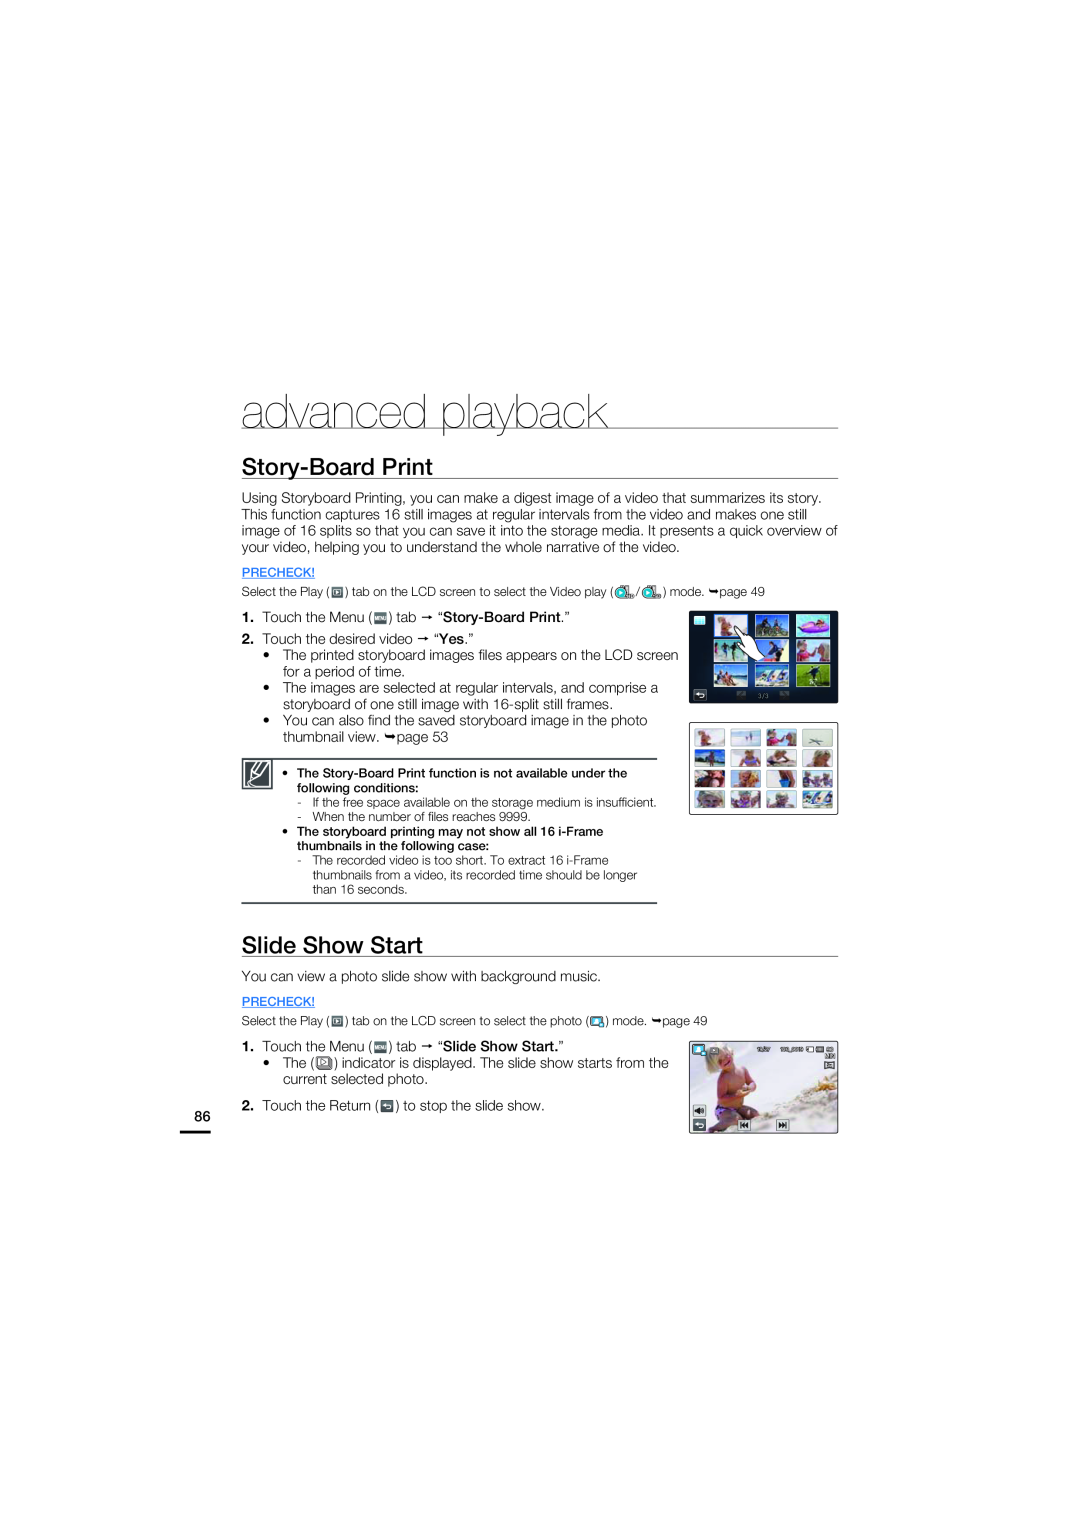 Samsung HMX-S15BN/XAA, HMX-S10BN/XAA manual Story-Board Print, Slide Show Start, advanced playback 